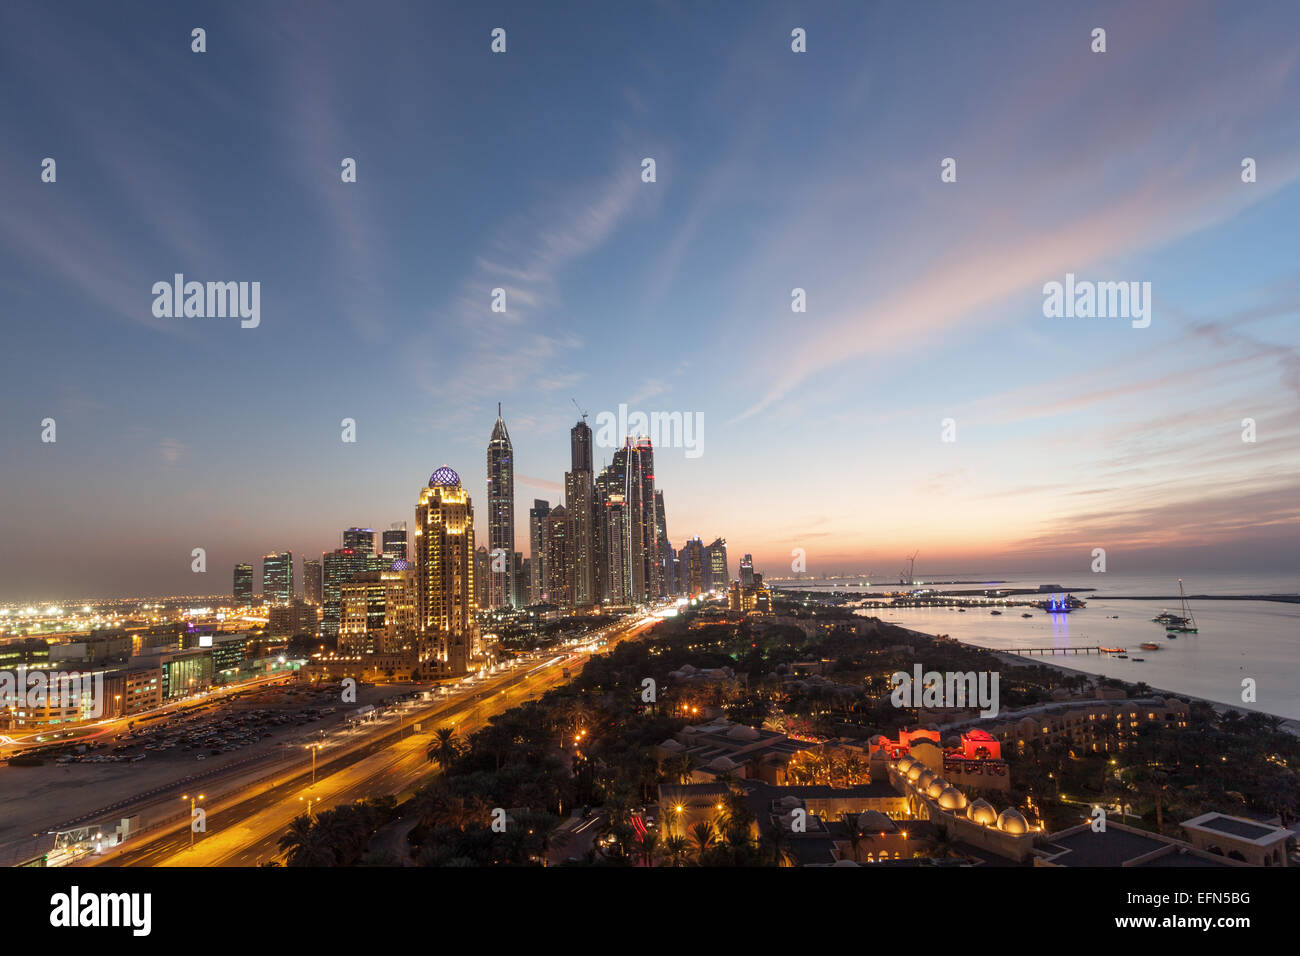 Dubai Marina Towers and Arabian Gulf coast at night. Dubai, United Arab Emirates Stock Photo